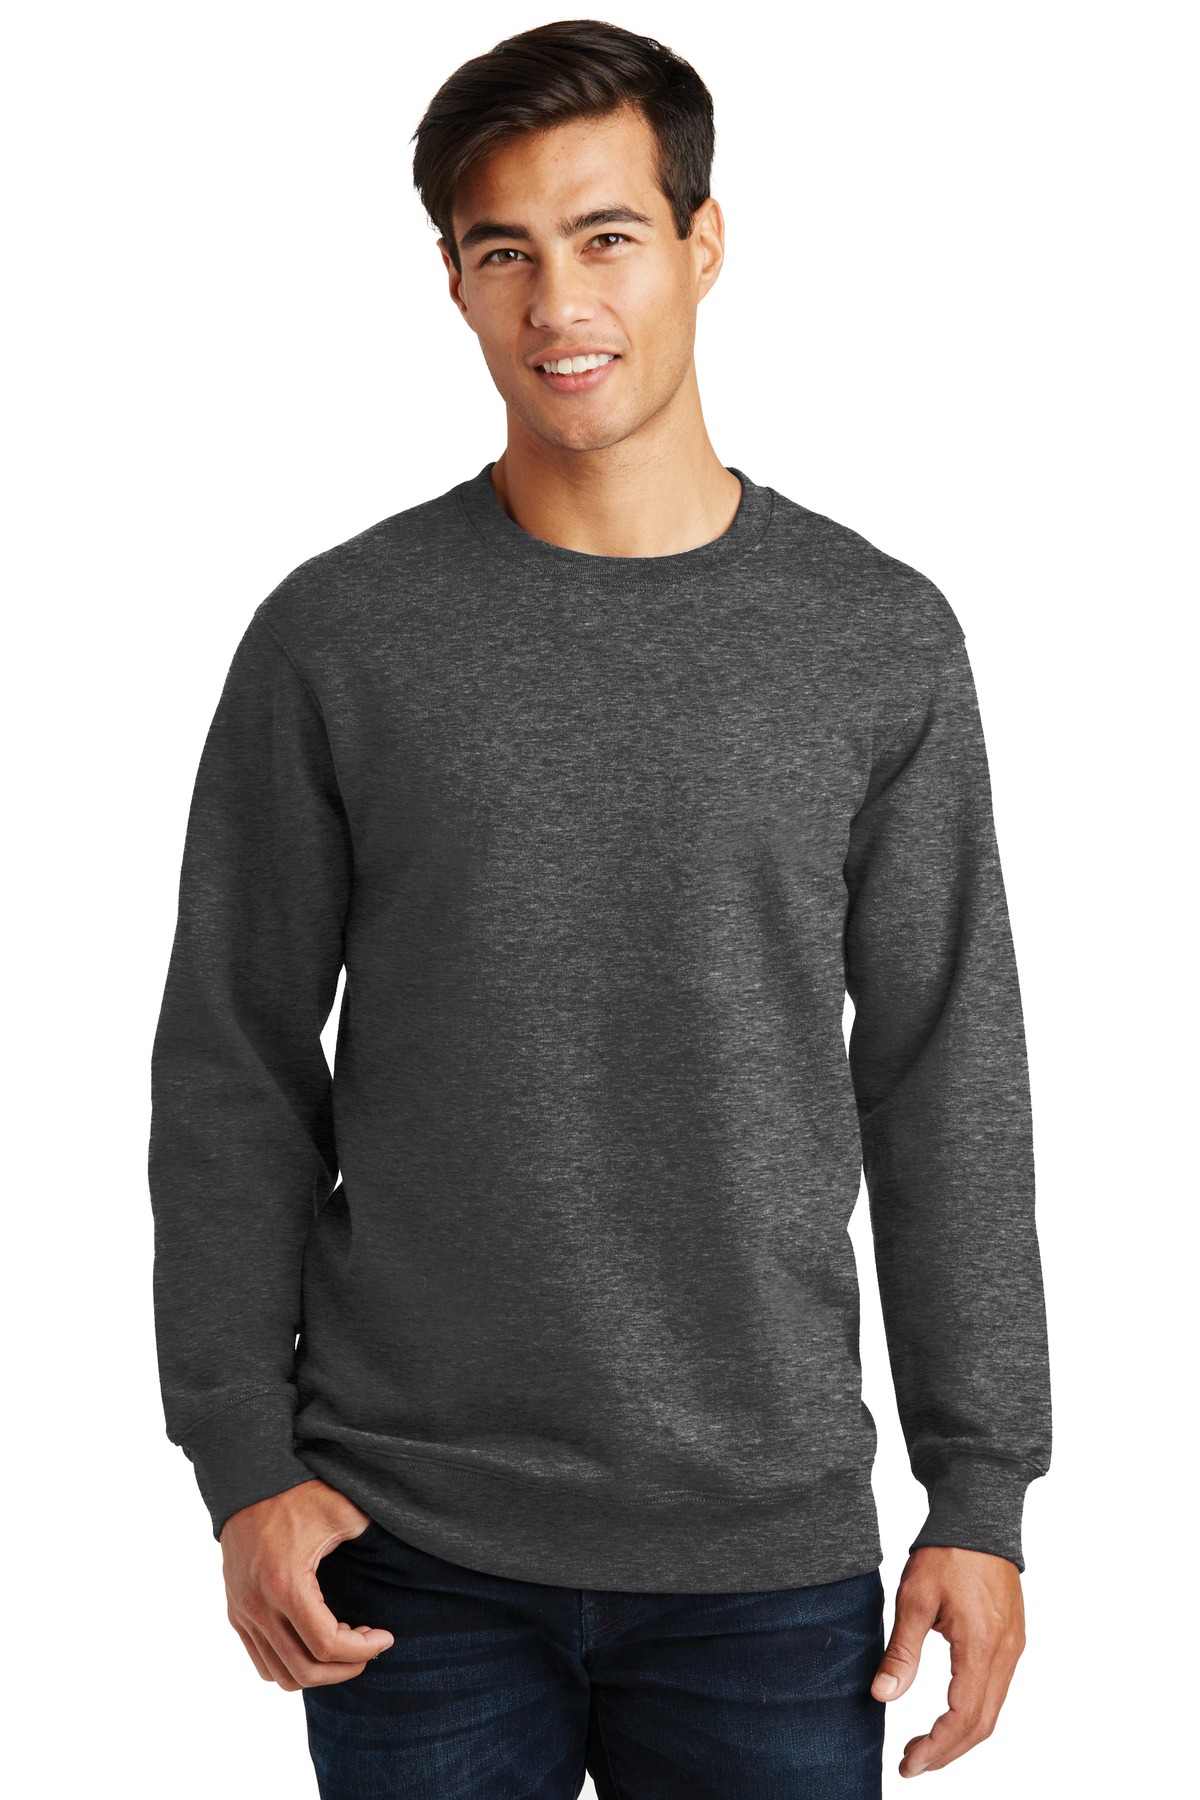 Port & Company Pc850 Unisex Fan Favorite Fleece Crewneck Sweatshirt | Jiffy  Shirts